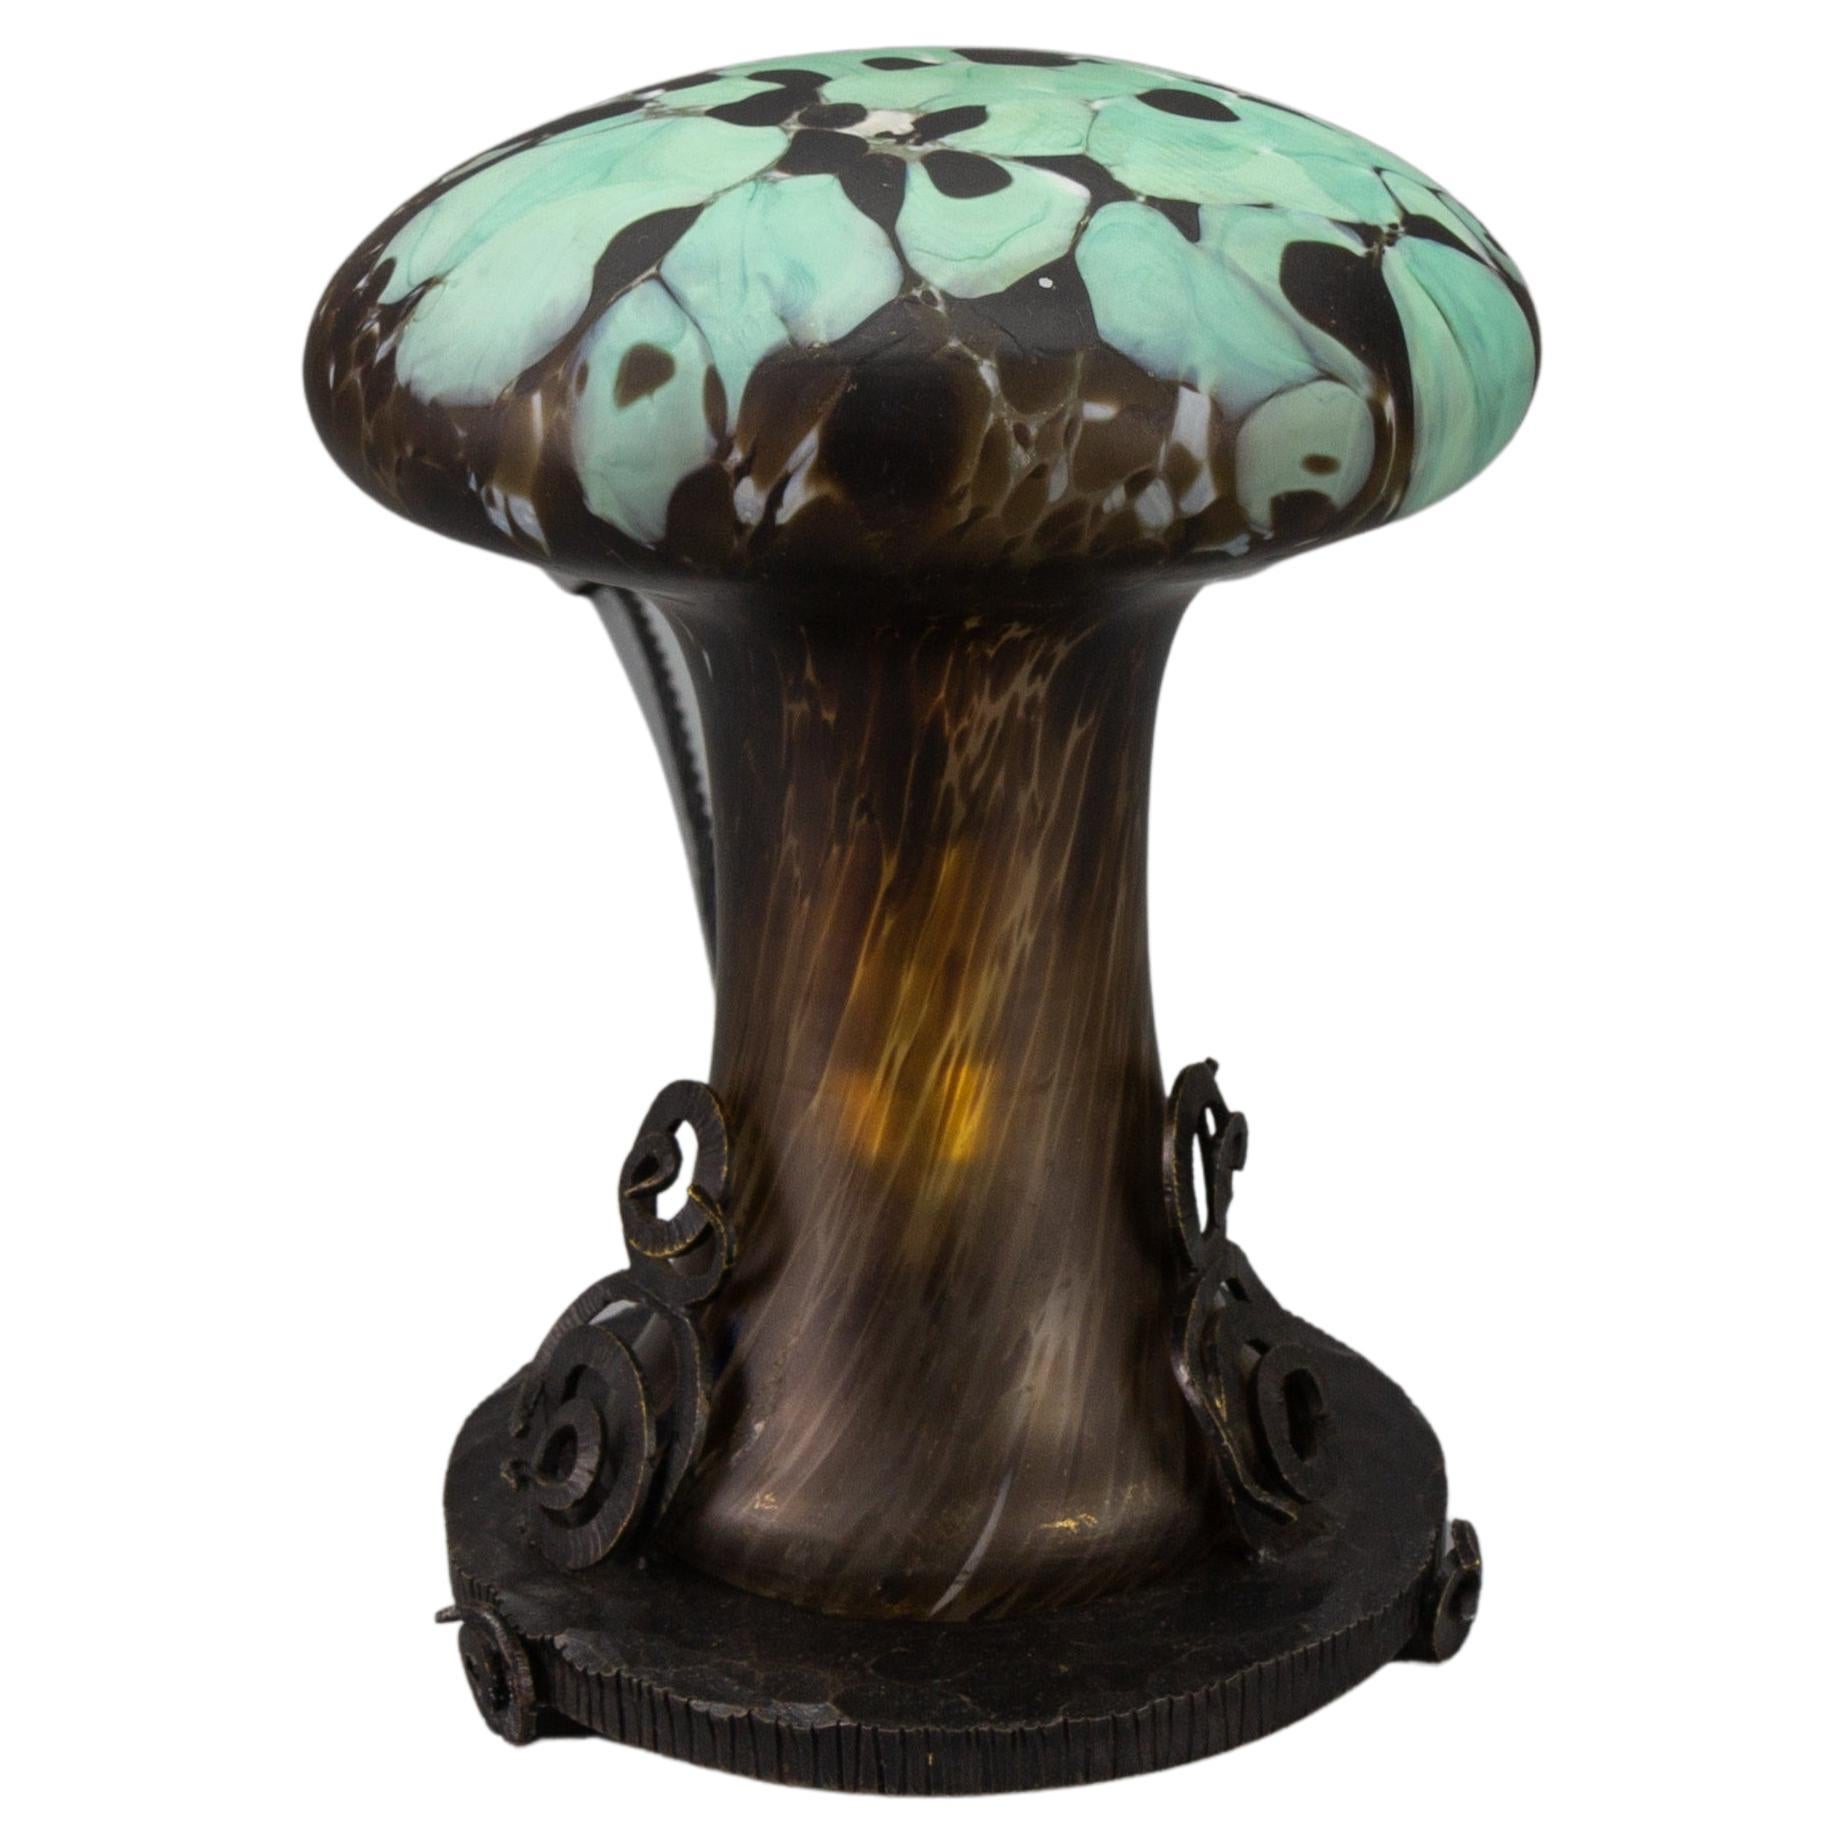 French Wrought Iron and Turquoise & Dark Brown Art Glass Lamp Mushroom